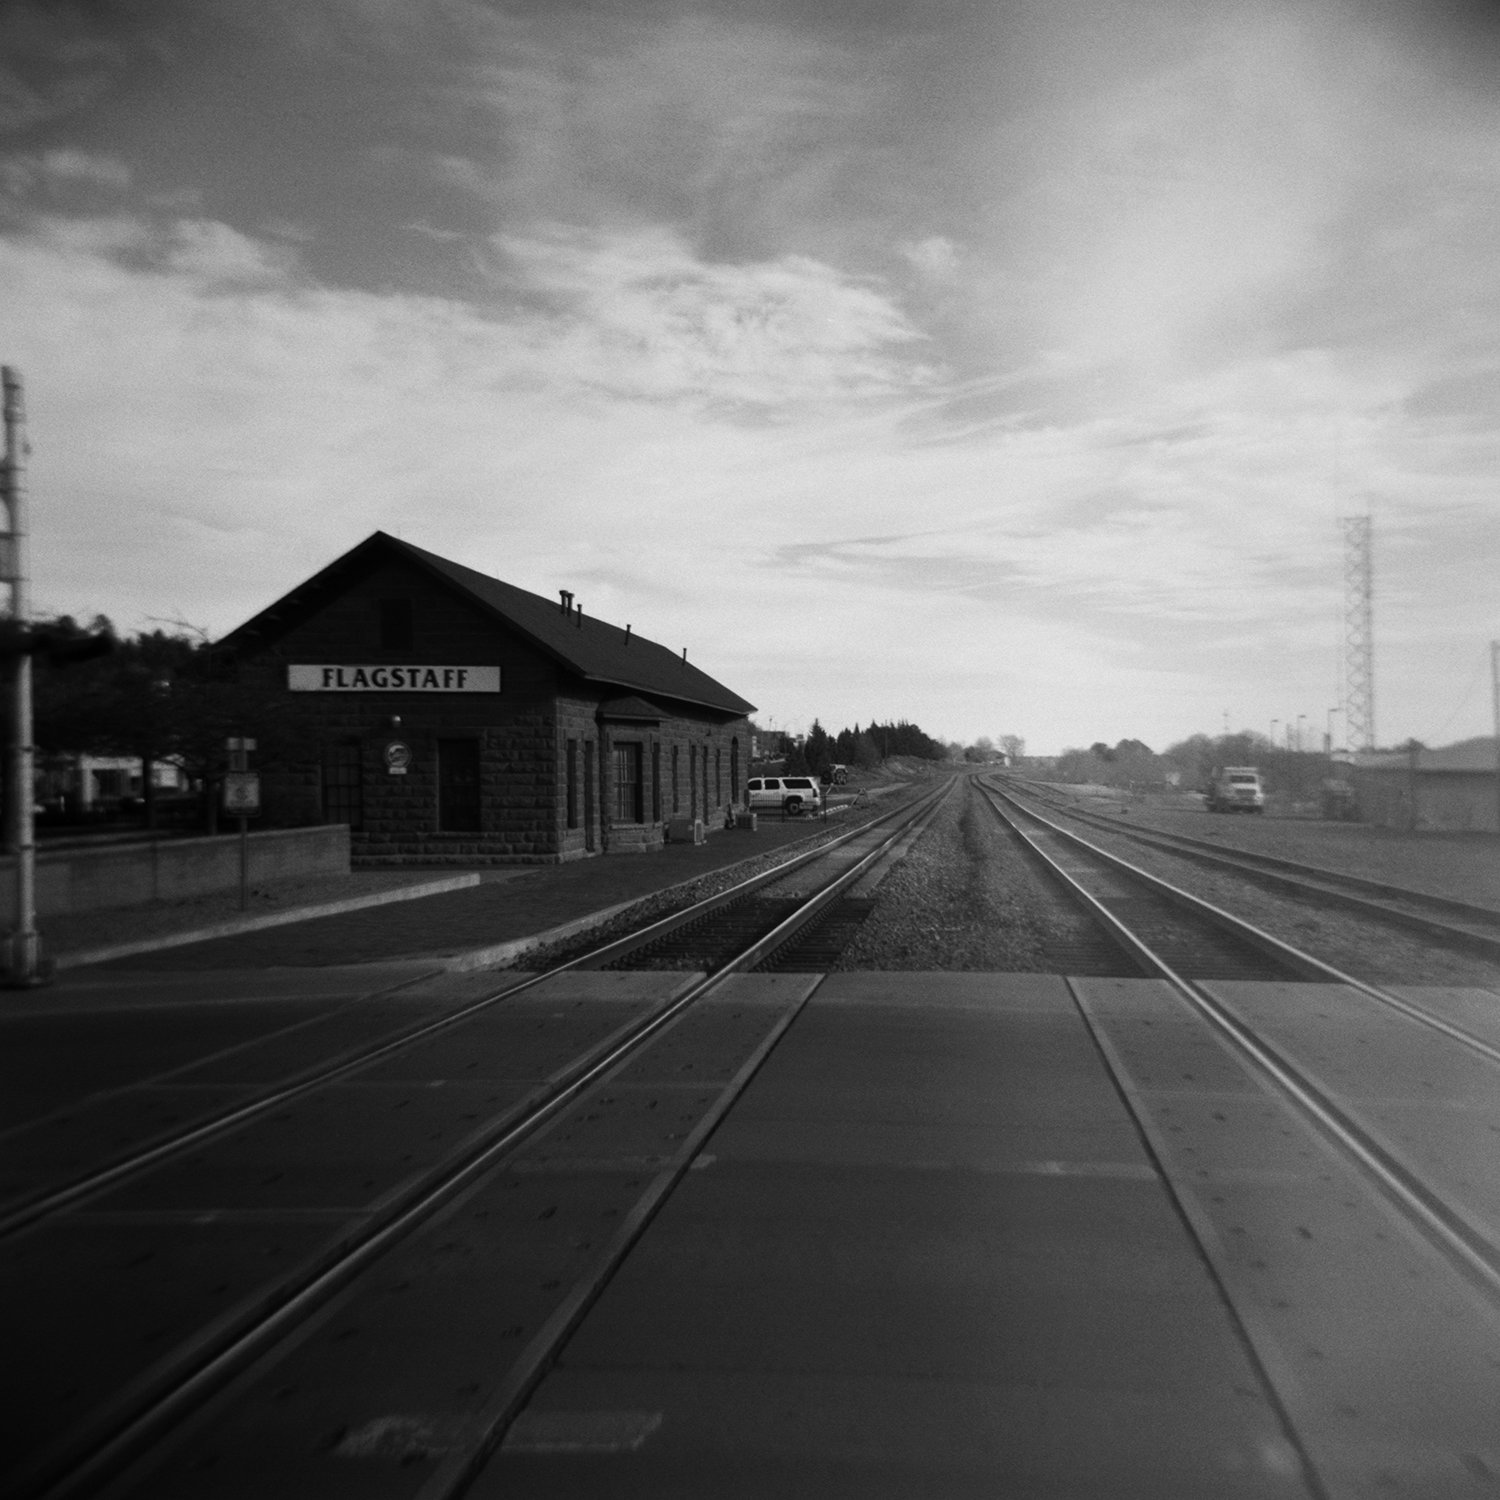 Where is Home? (Northern Arizona University: Railroad Crossing at San Francisco Street / Rest in Peace Ryan Reid) by Aaron Wilder